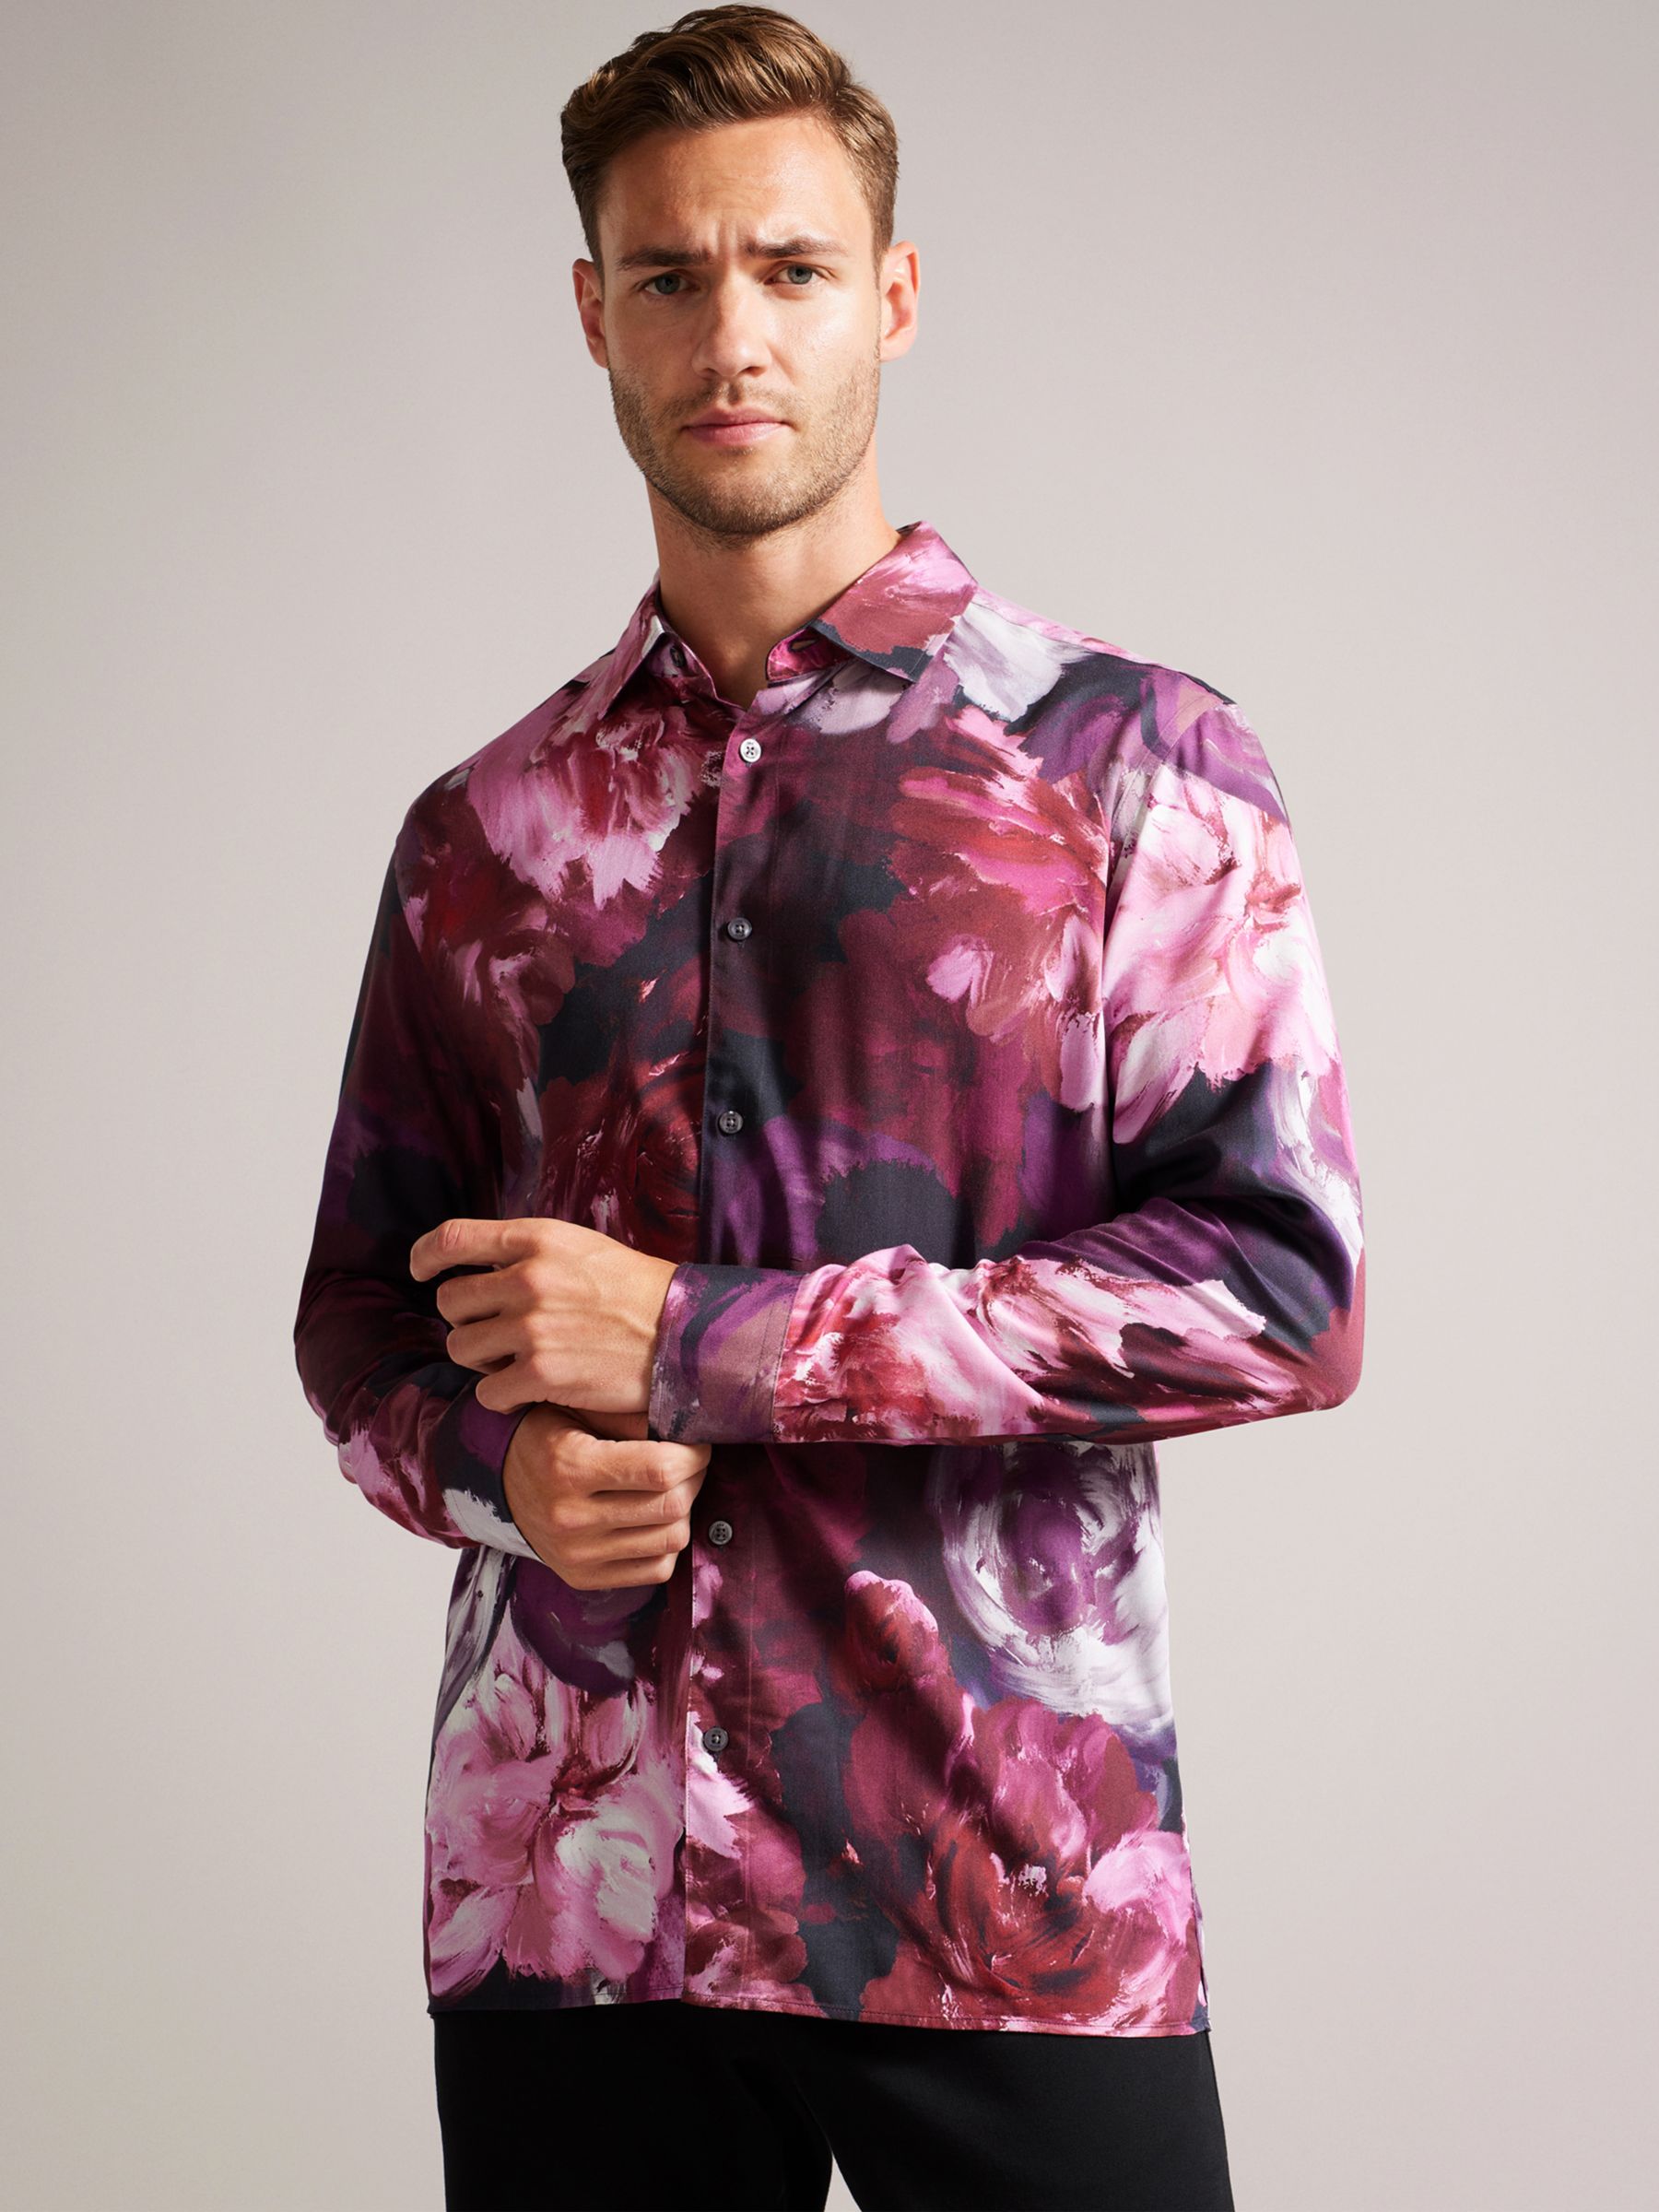 Men's Floral Shirts  John Lewis & Partners